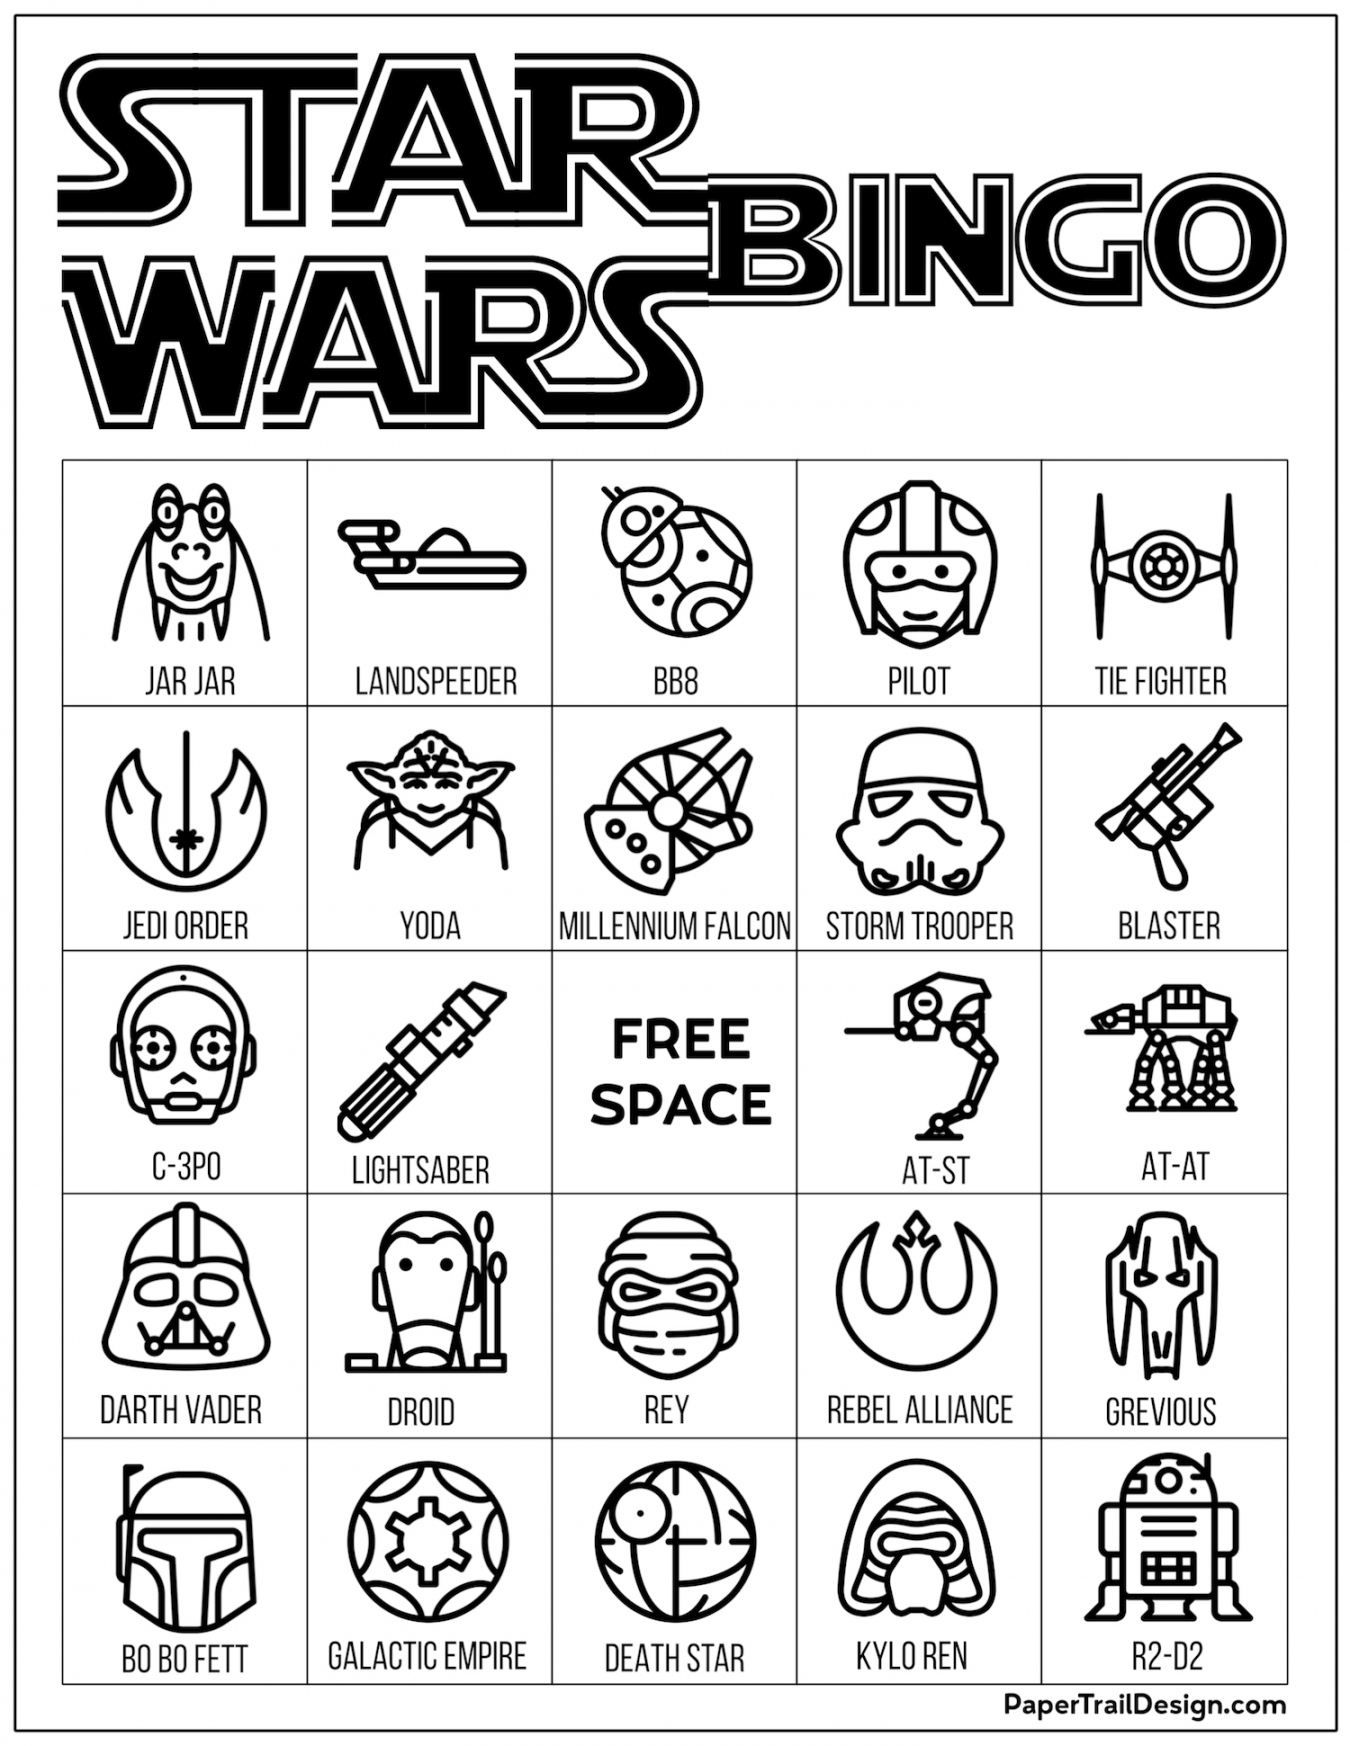 Star Wars Bingo Free Printable Party Game - Paper Trail Design